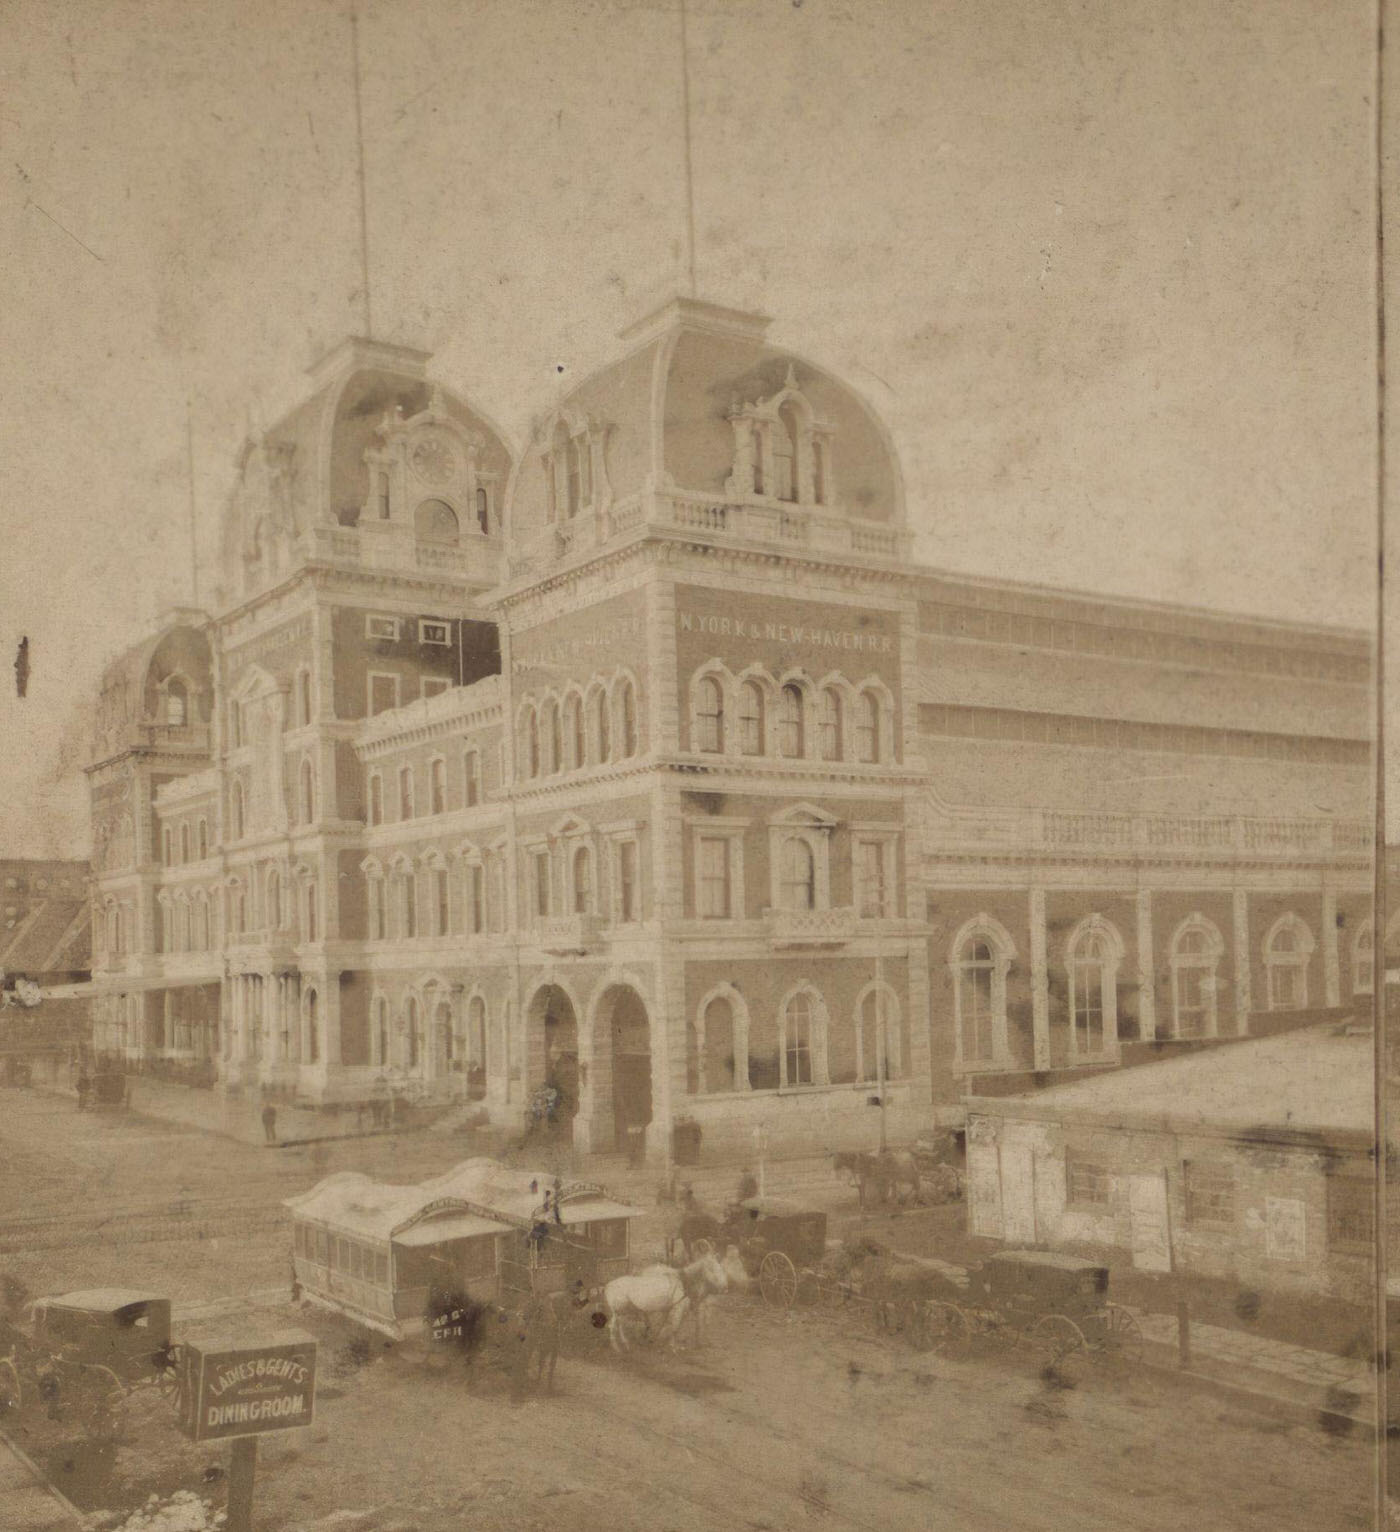 Grand Central Depot, Manhattan, New York City, 1890S